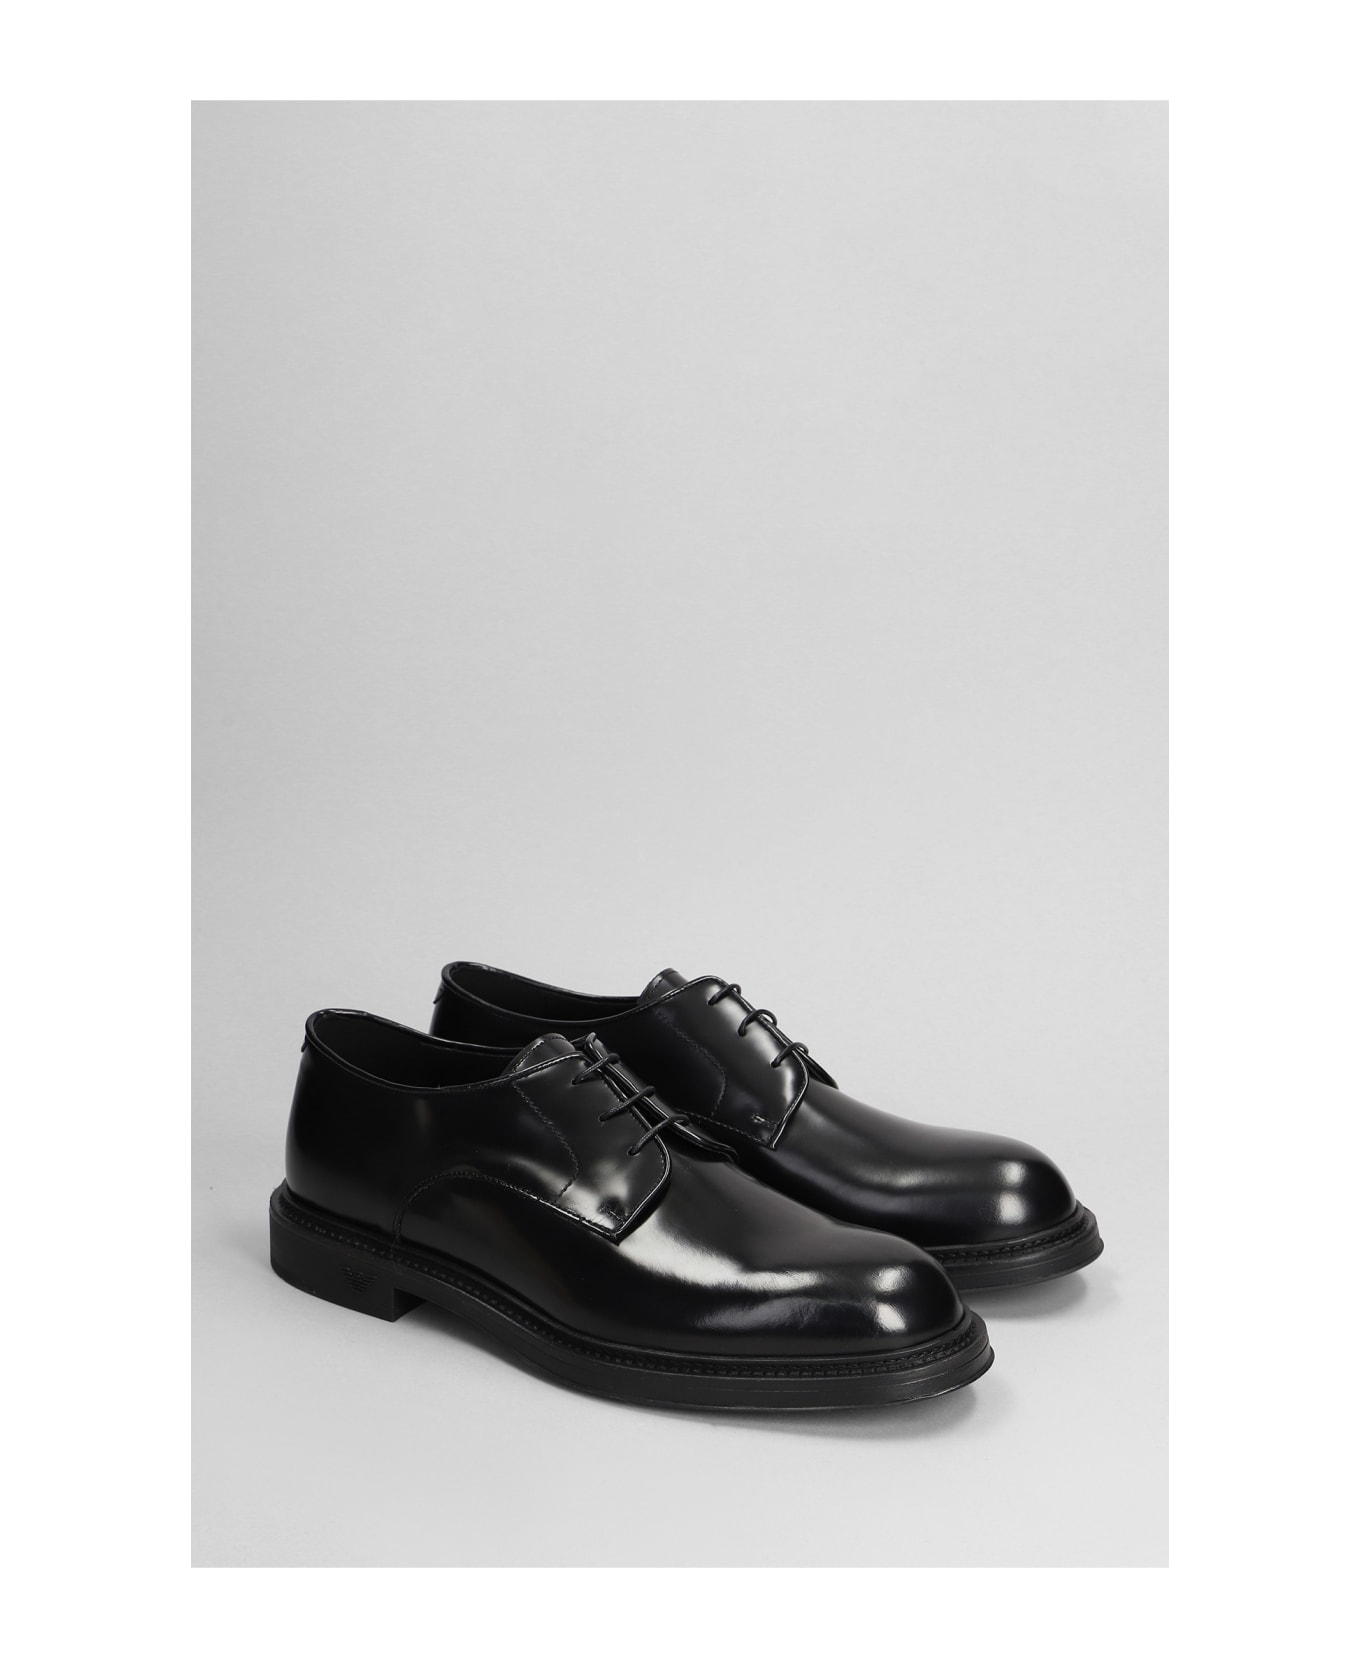 Emporio Armani Leather Derby Shoes - black